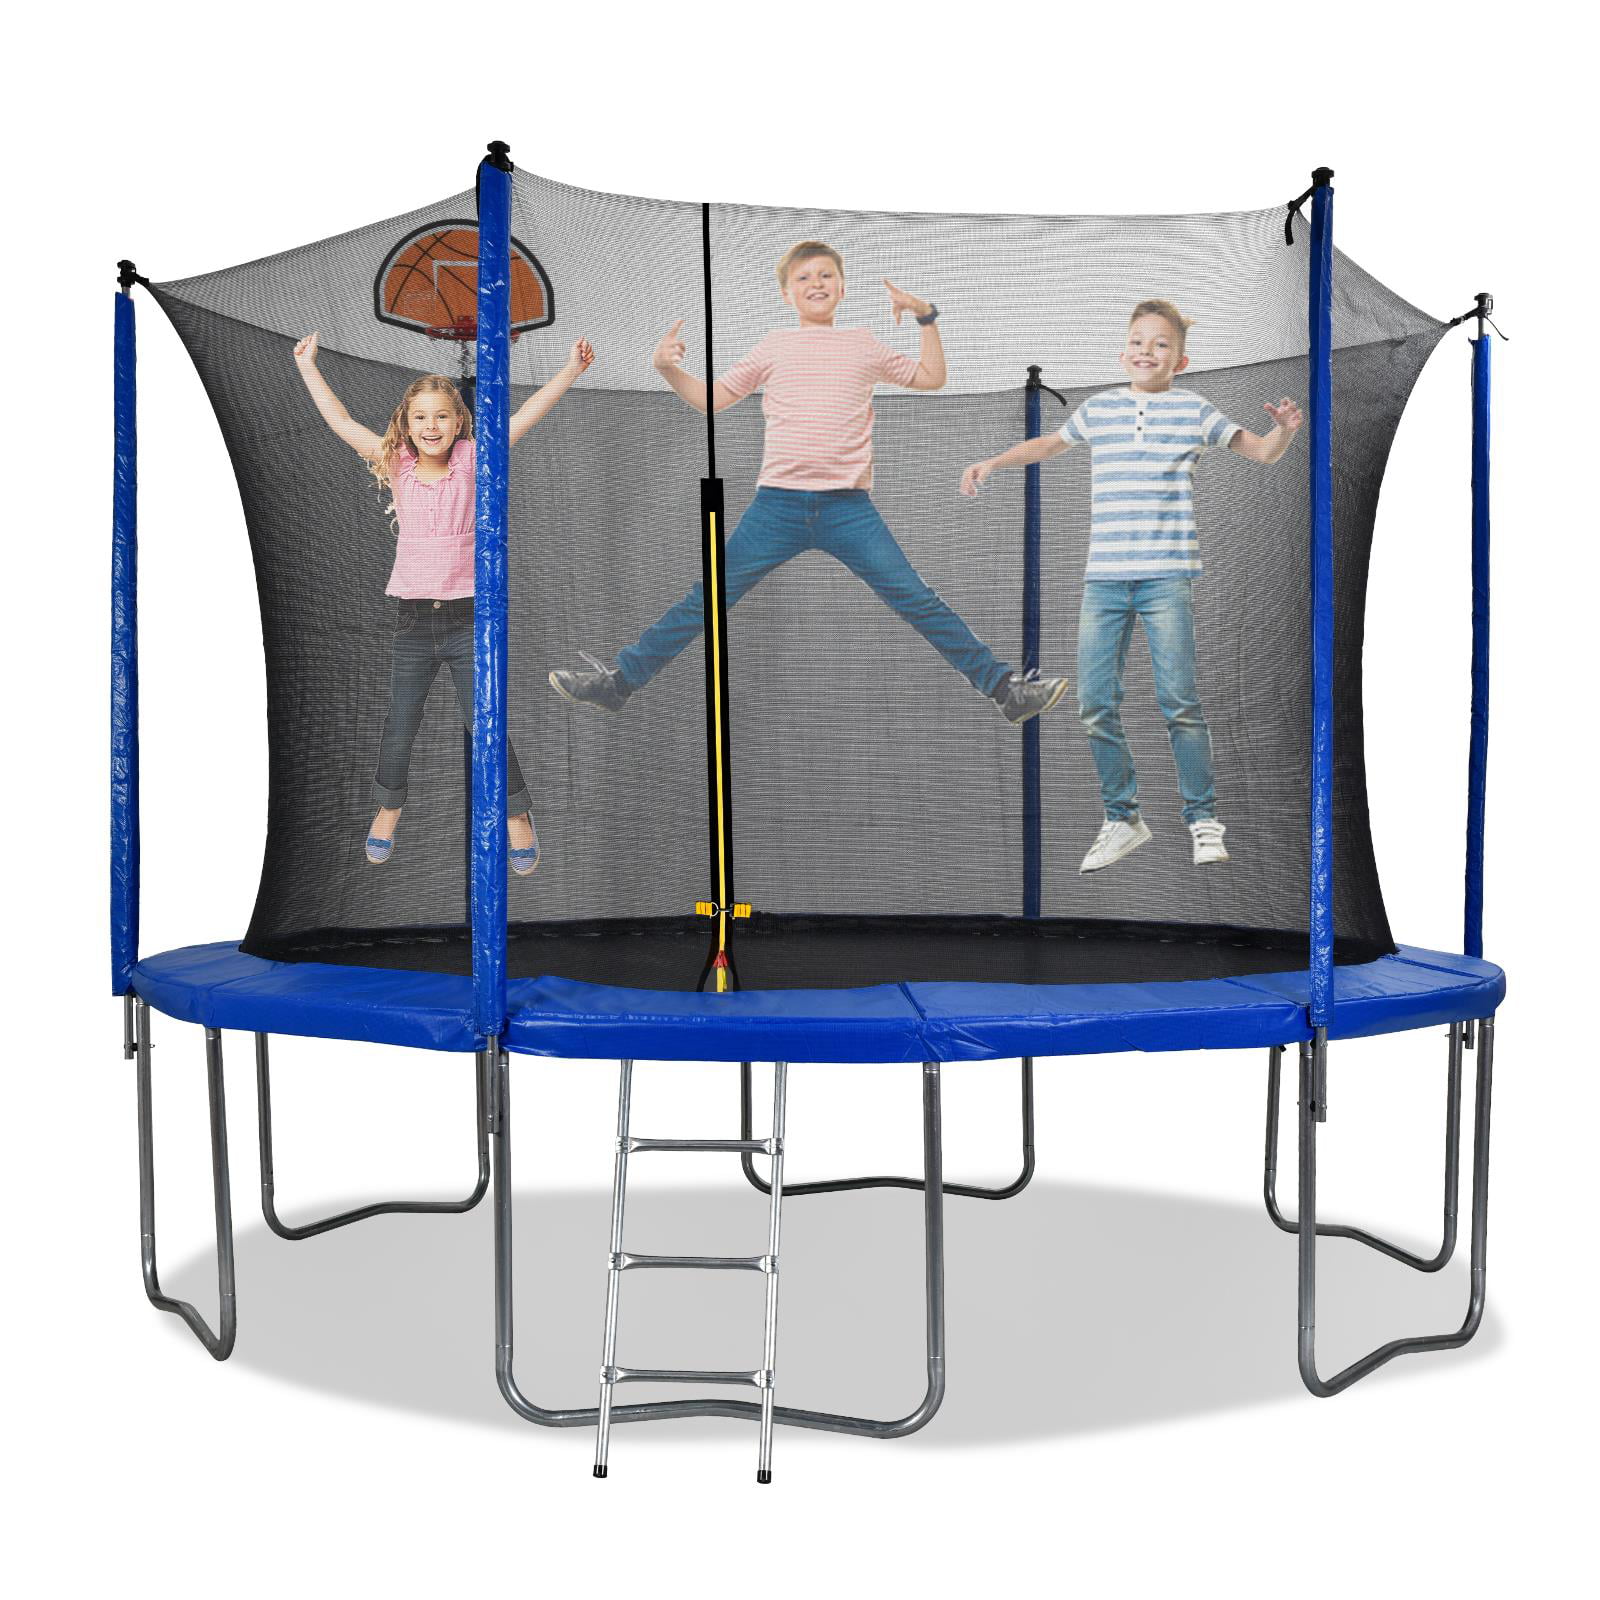 UBesGoo New Upgraded 12 ft Diameter Kids Trampoline, with Basketball Hoop & Enclosure Net & Ladder